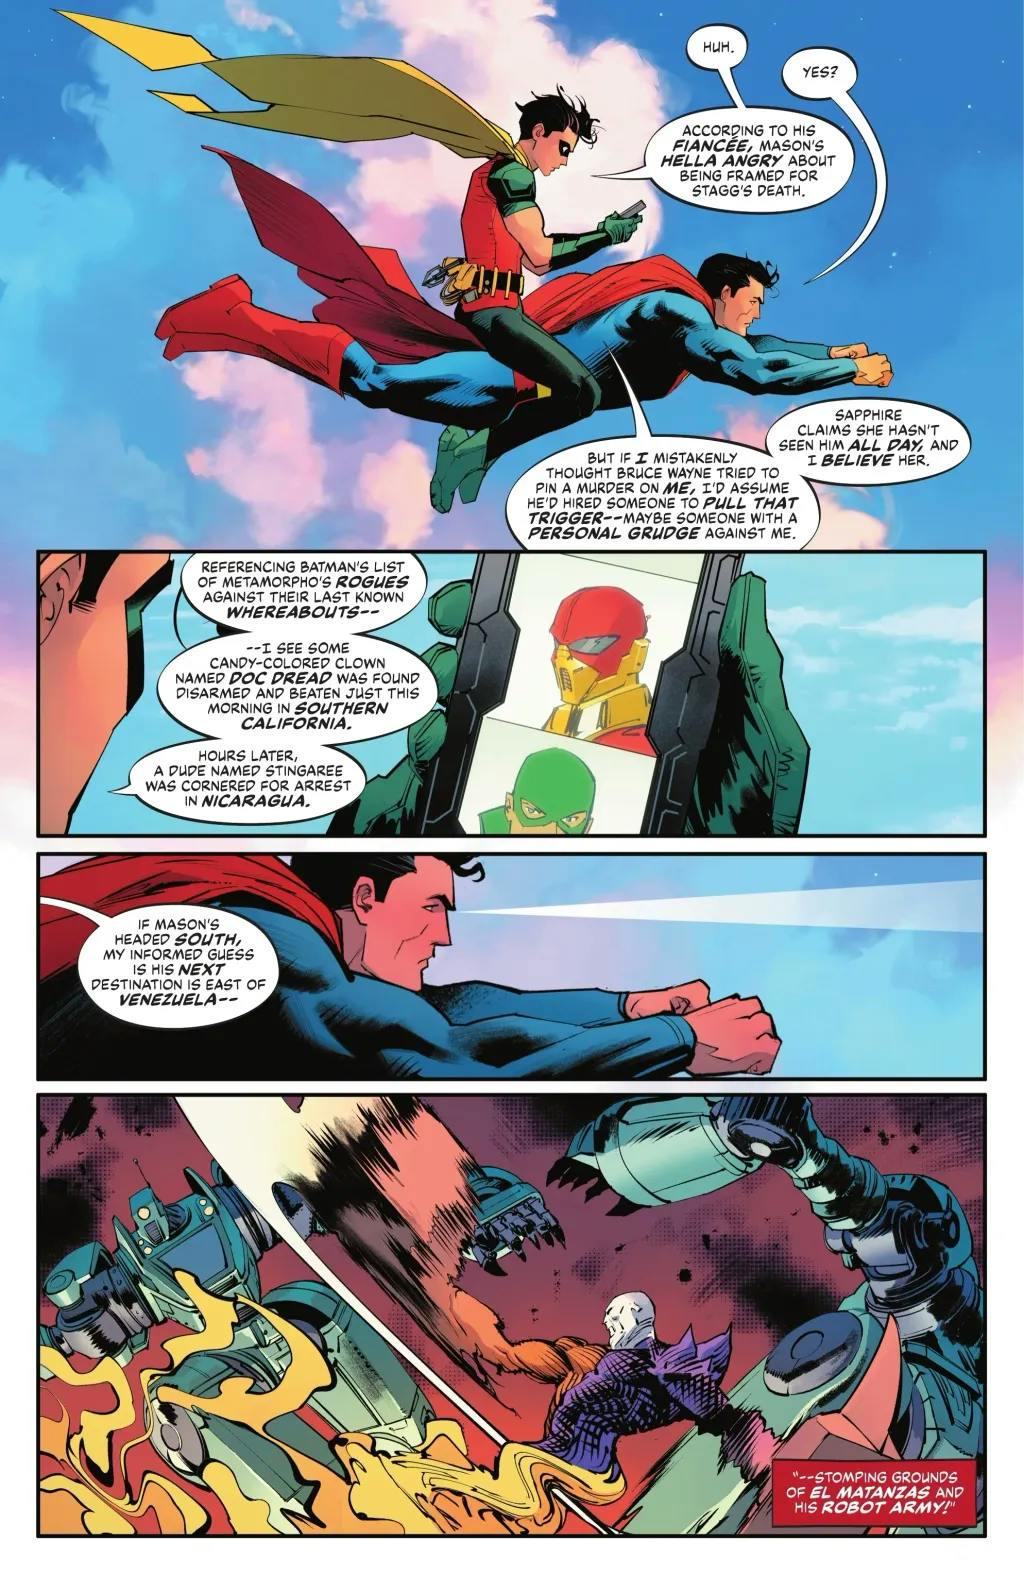 Batman/Superman: World's Finest #14 by Dan Mora